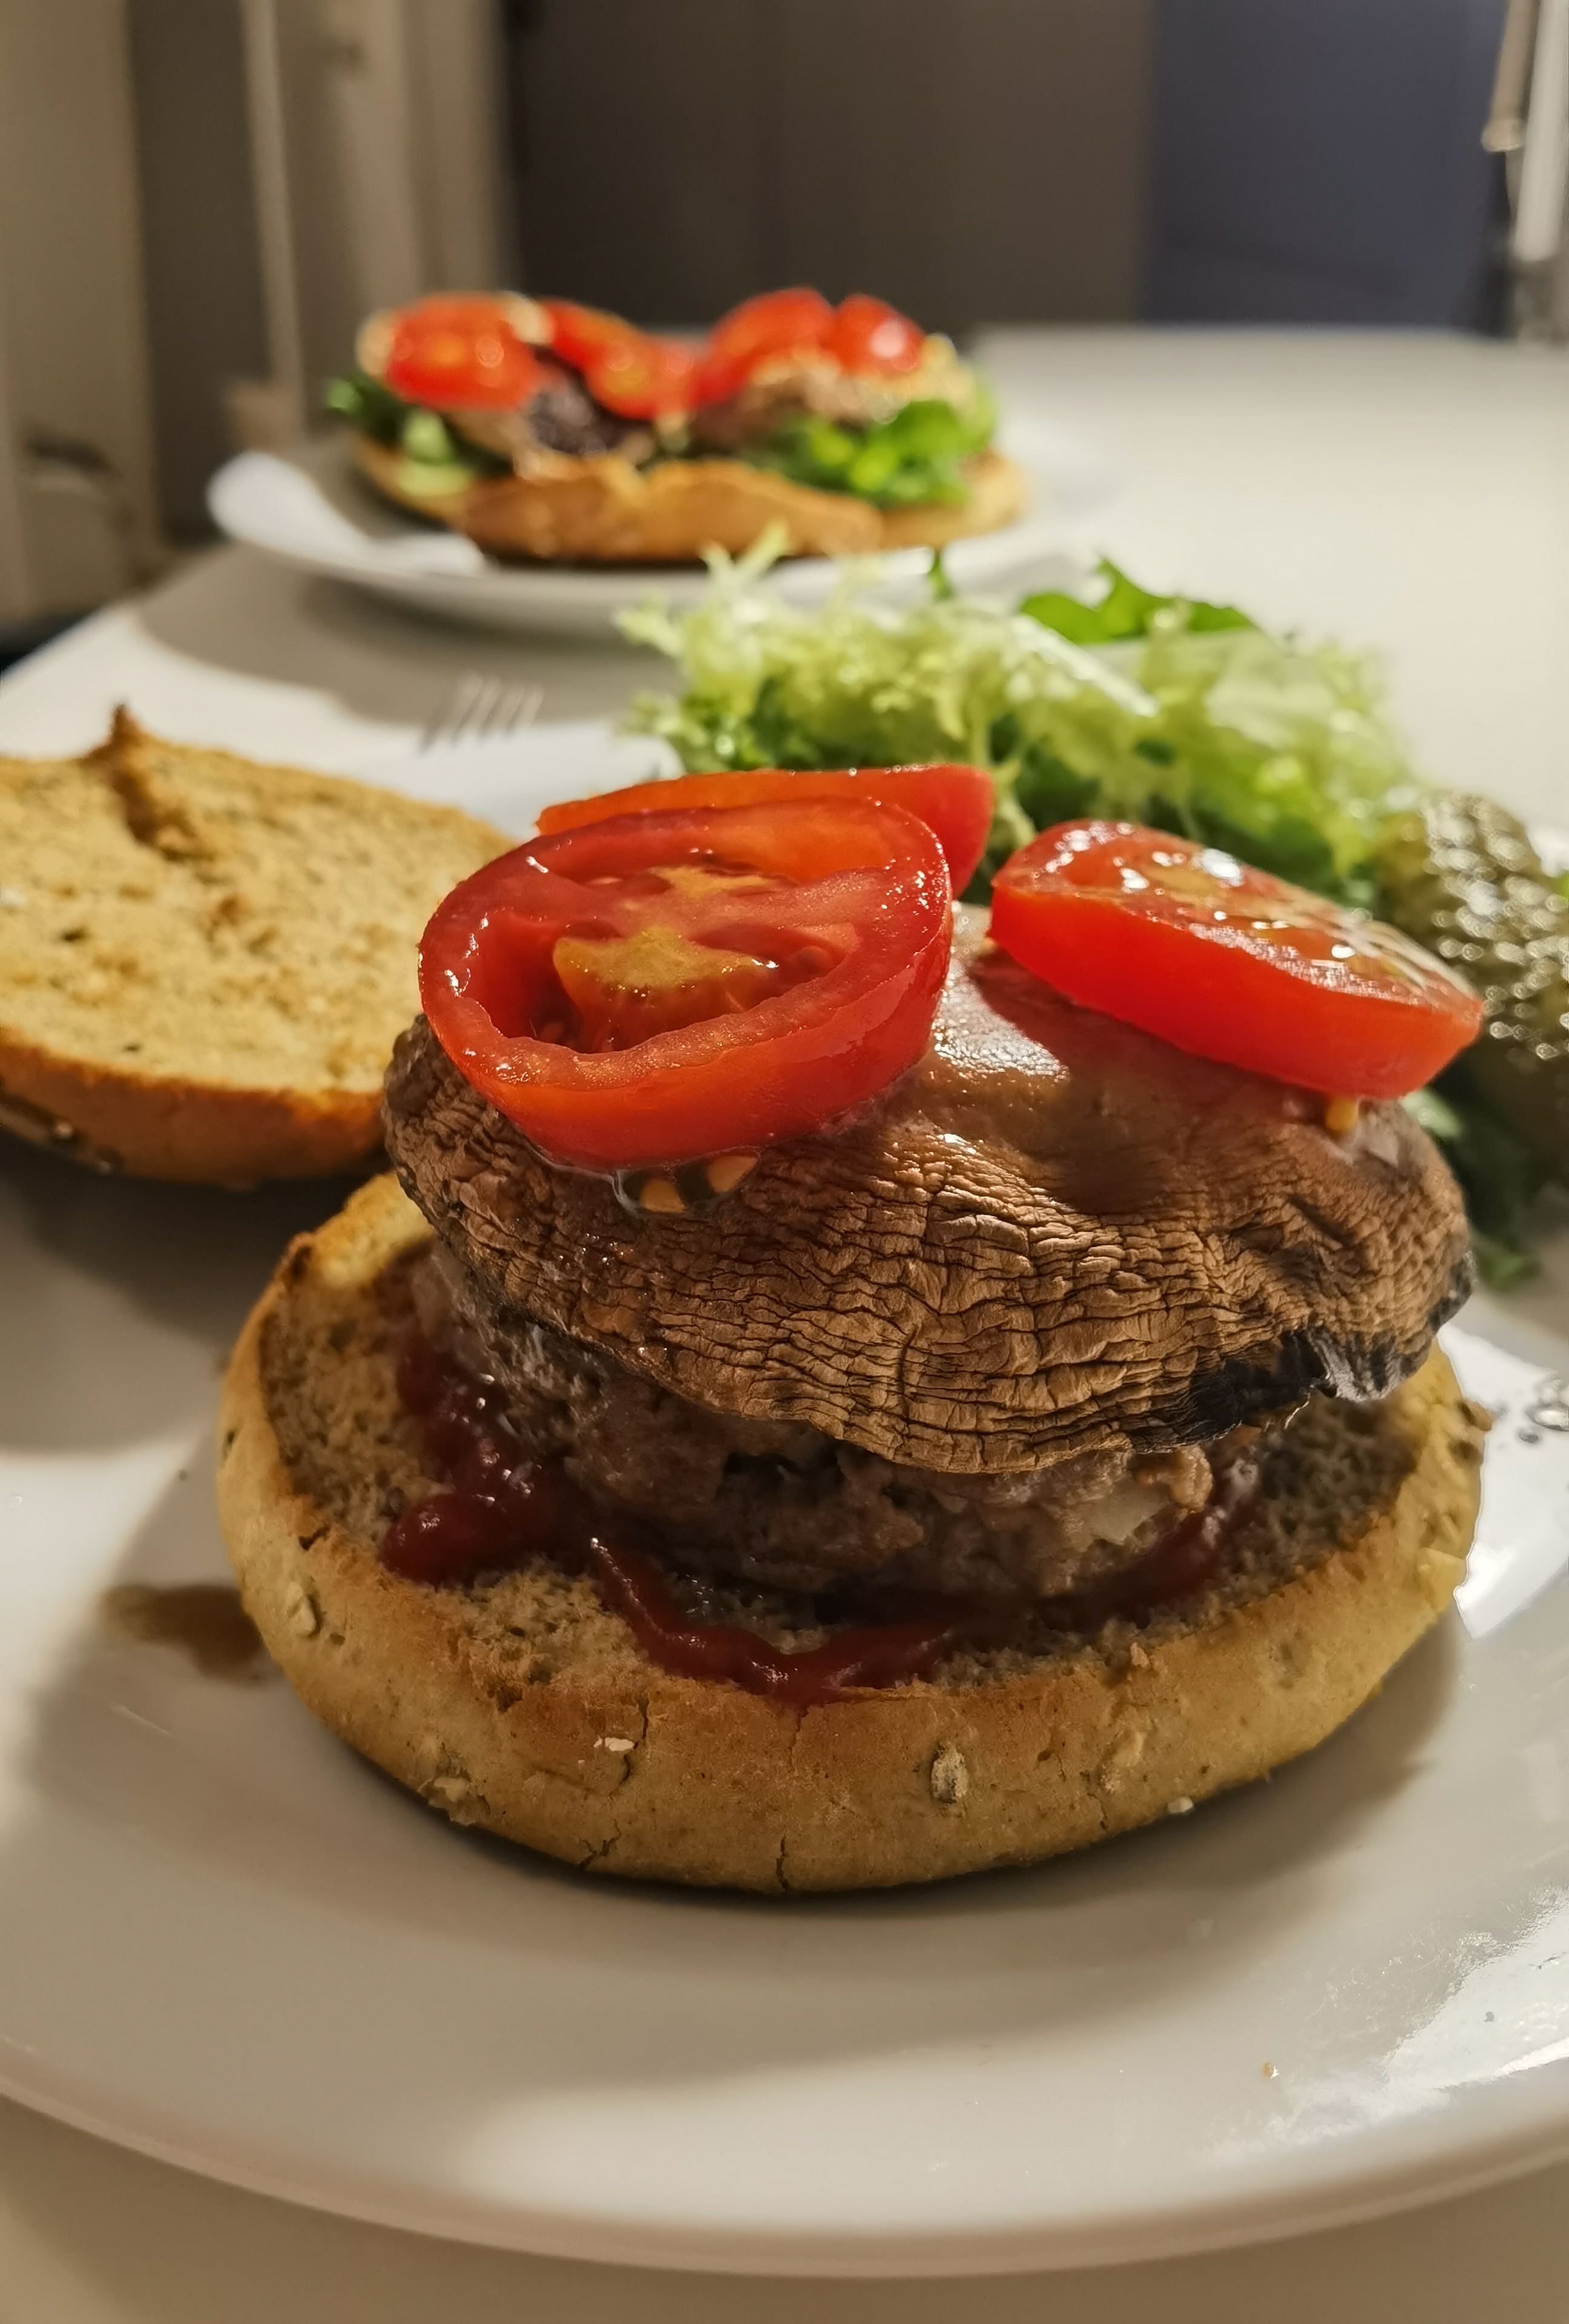 Shakeshack inspiration: mushroom burger (without cheese)